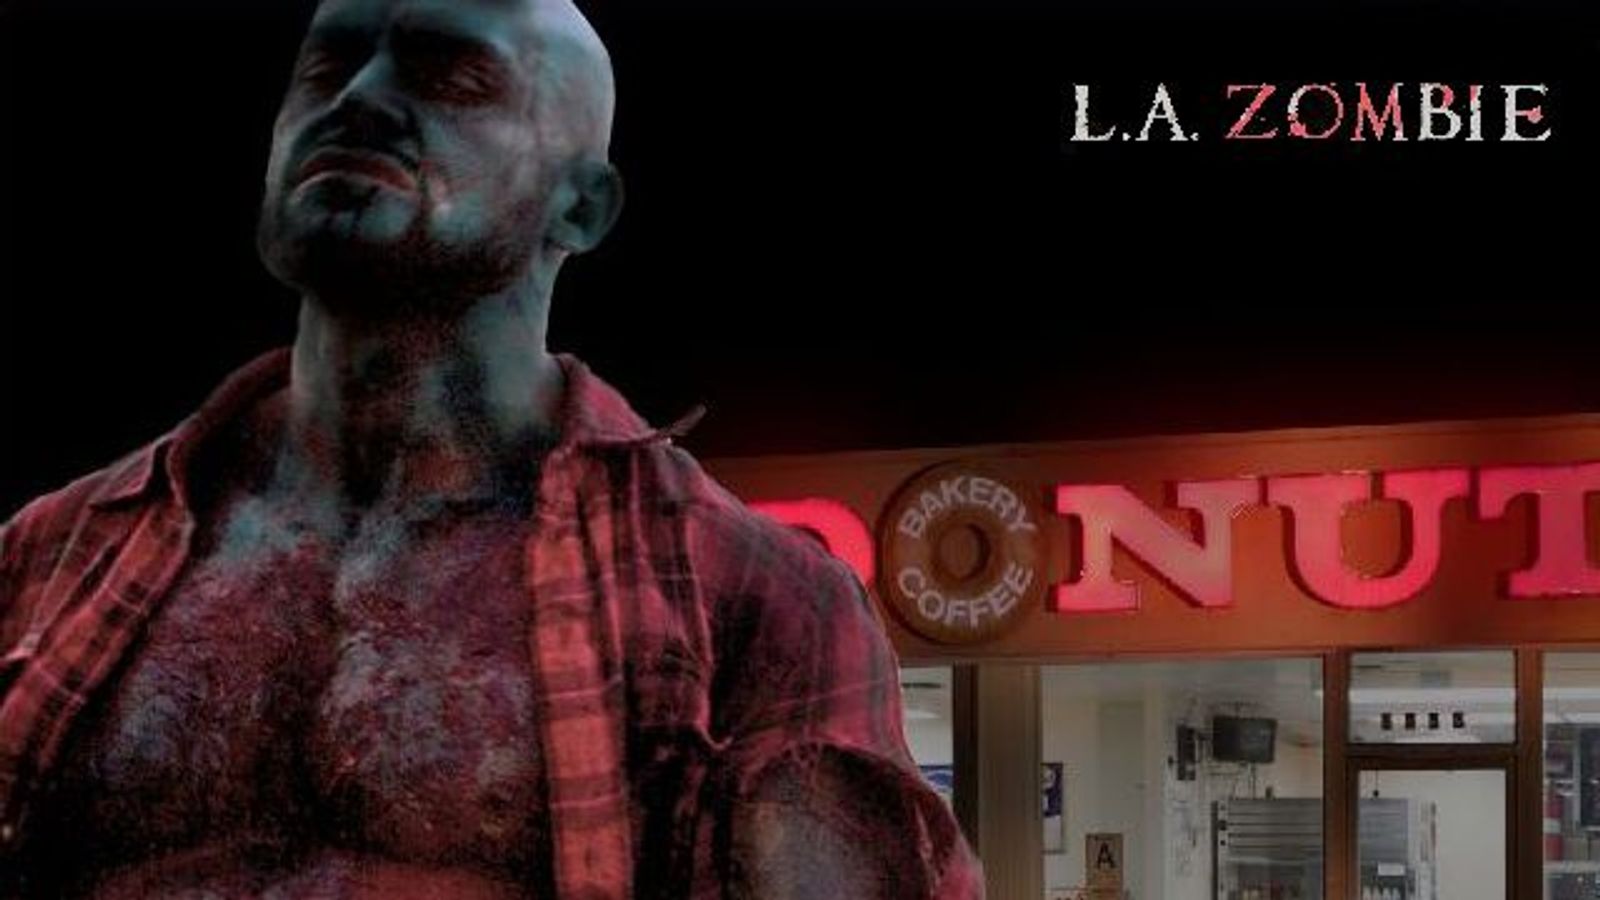 Aussie Director Regrets Unauthorized 'LA Zombie' Screening